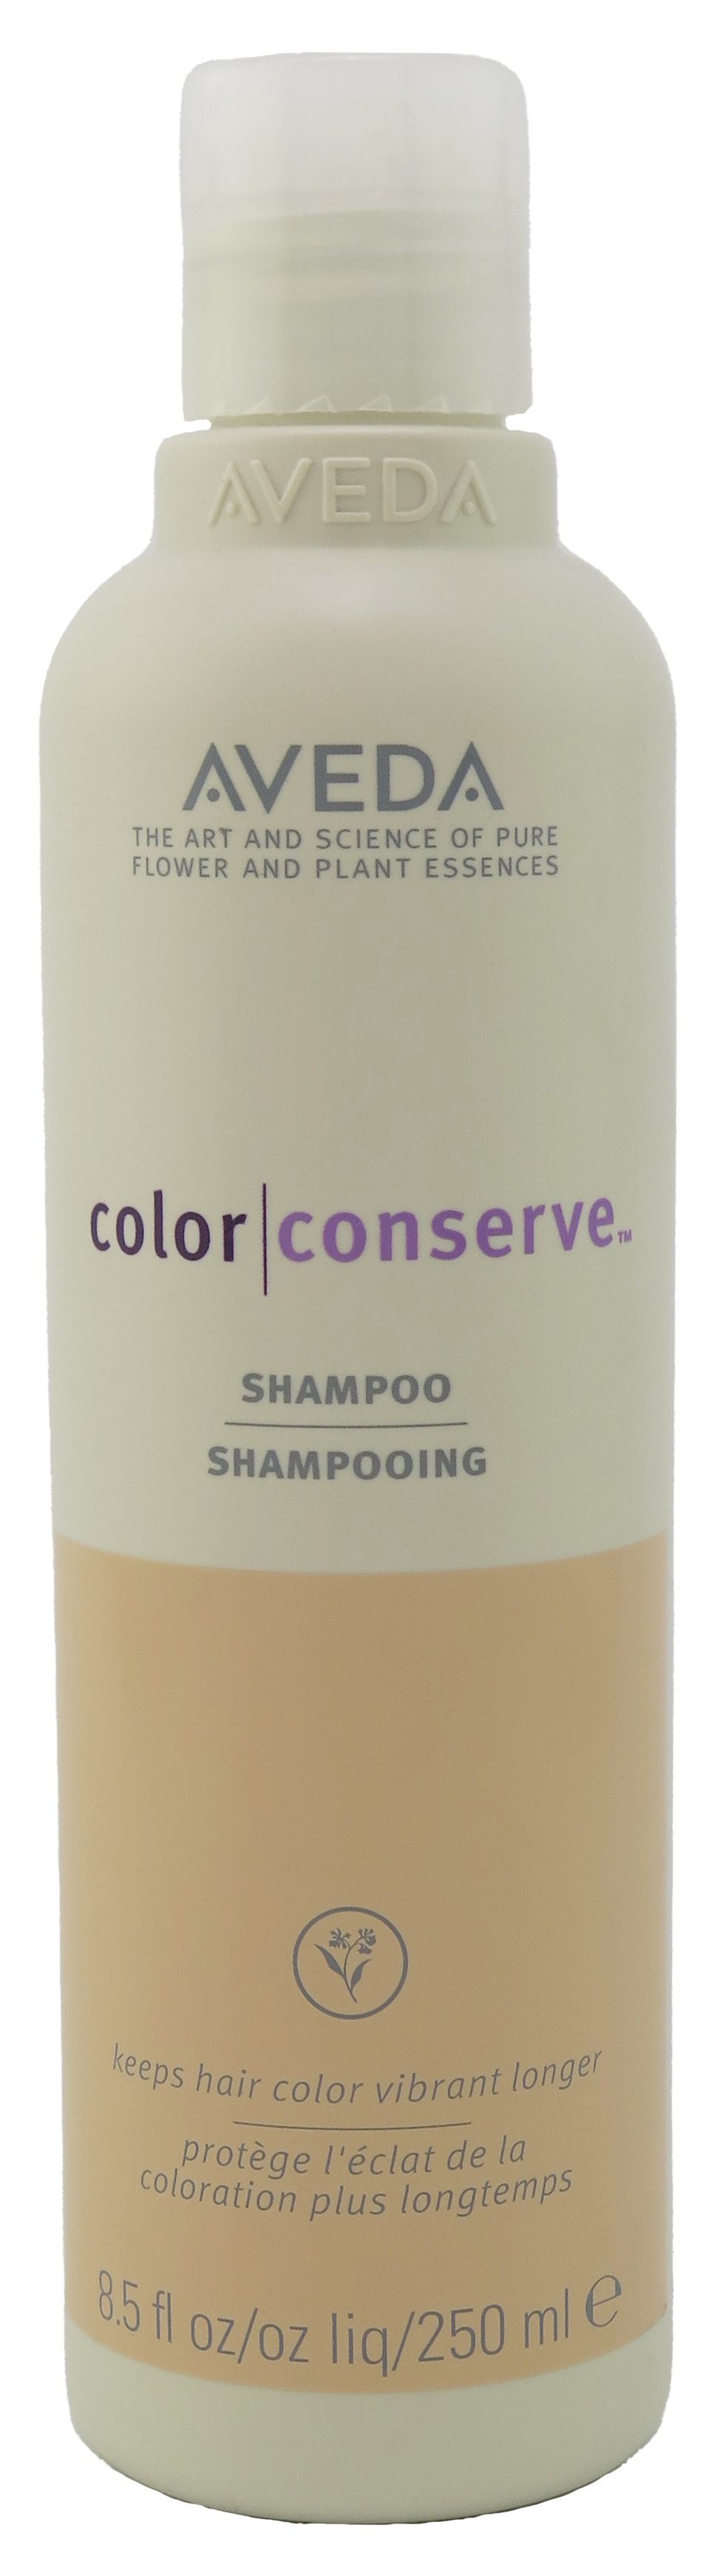 Aveda Color Conserve Shampoo 8.5 Fl oz